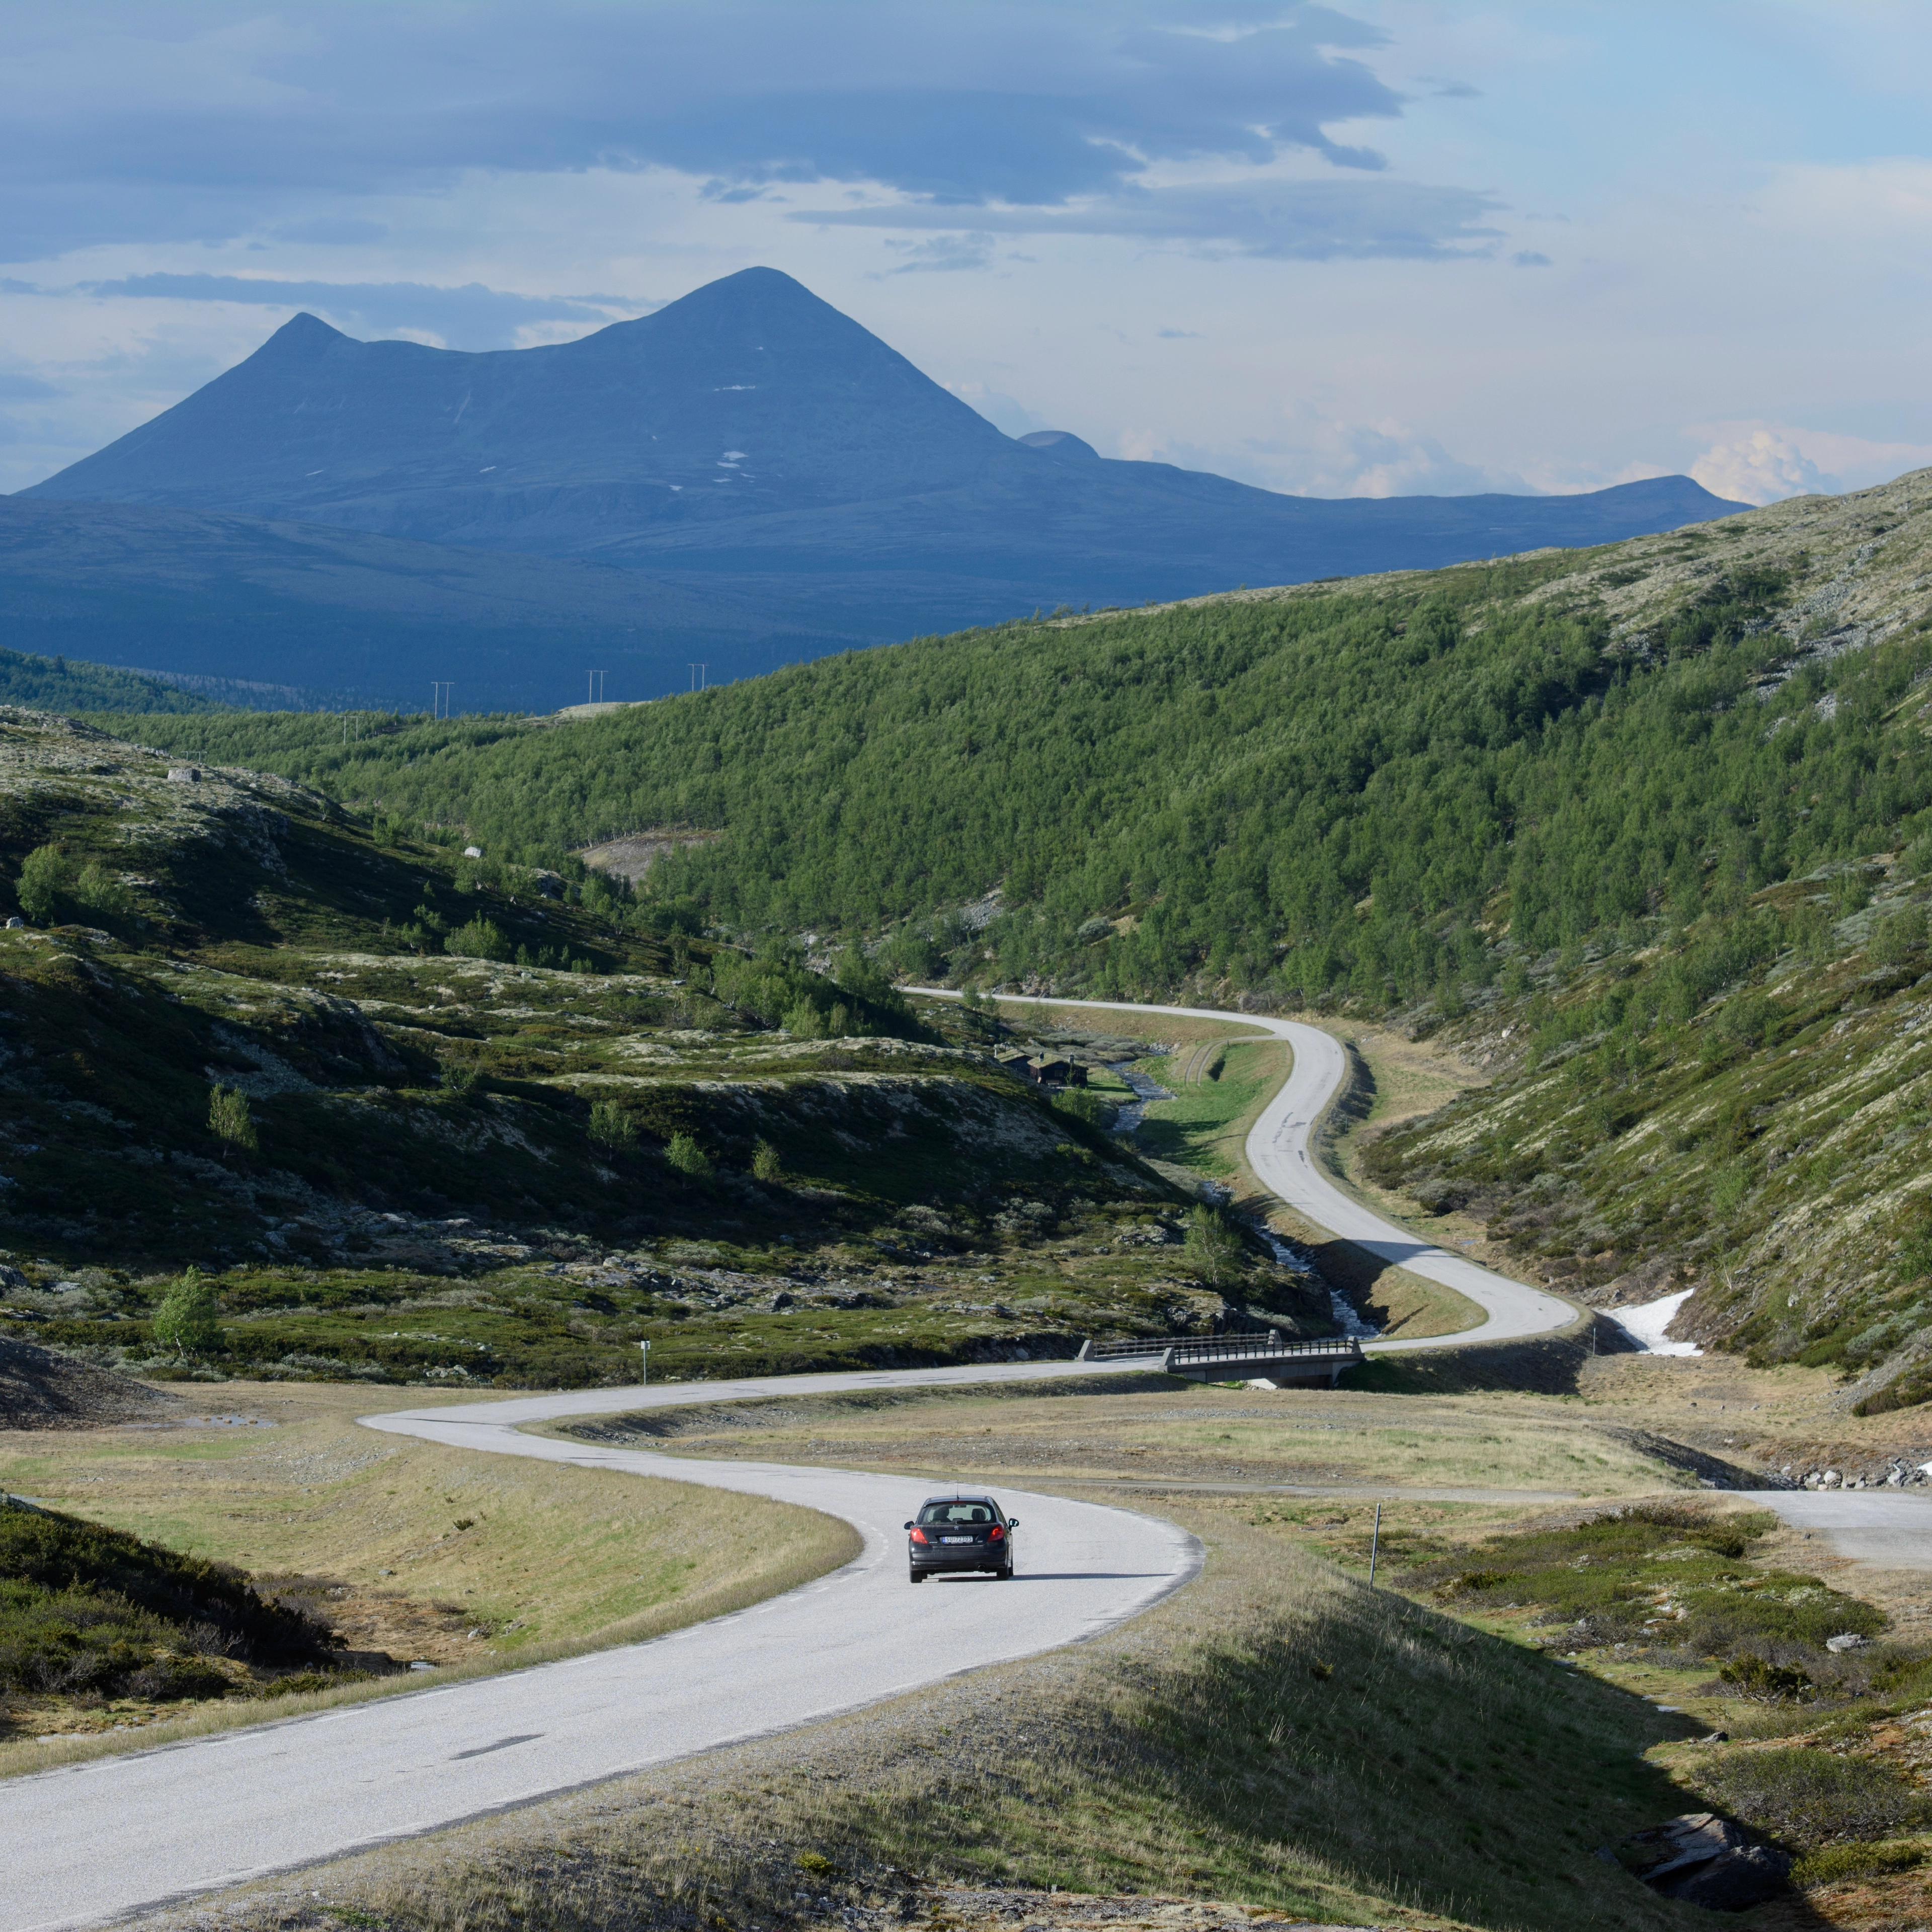  Nasjonal turistveg Rondane - Oslo -  Trondheim via Rondane med bil